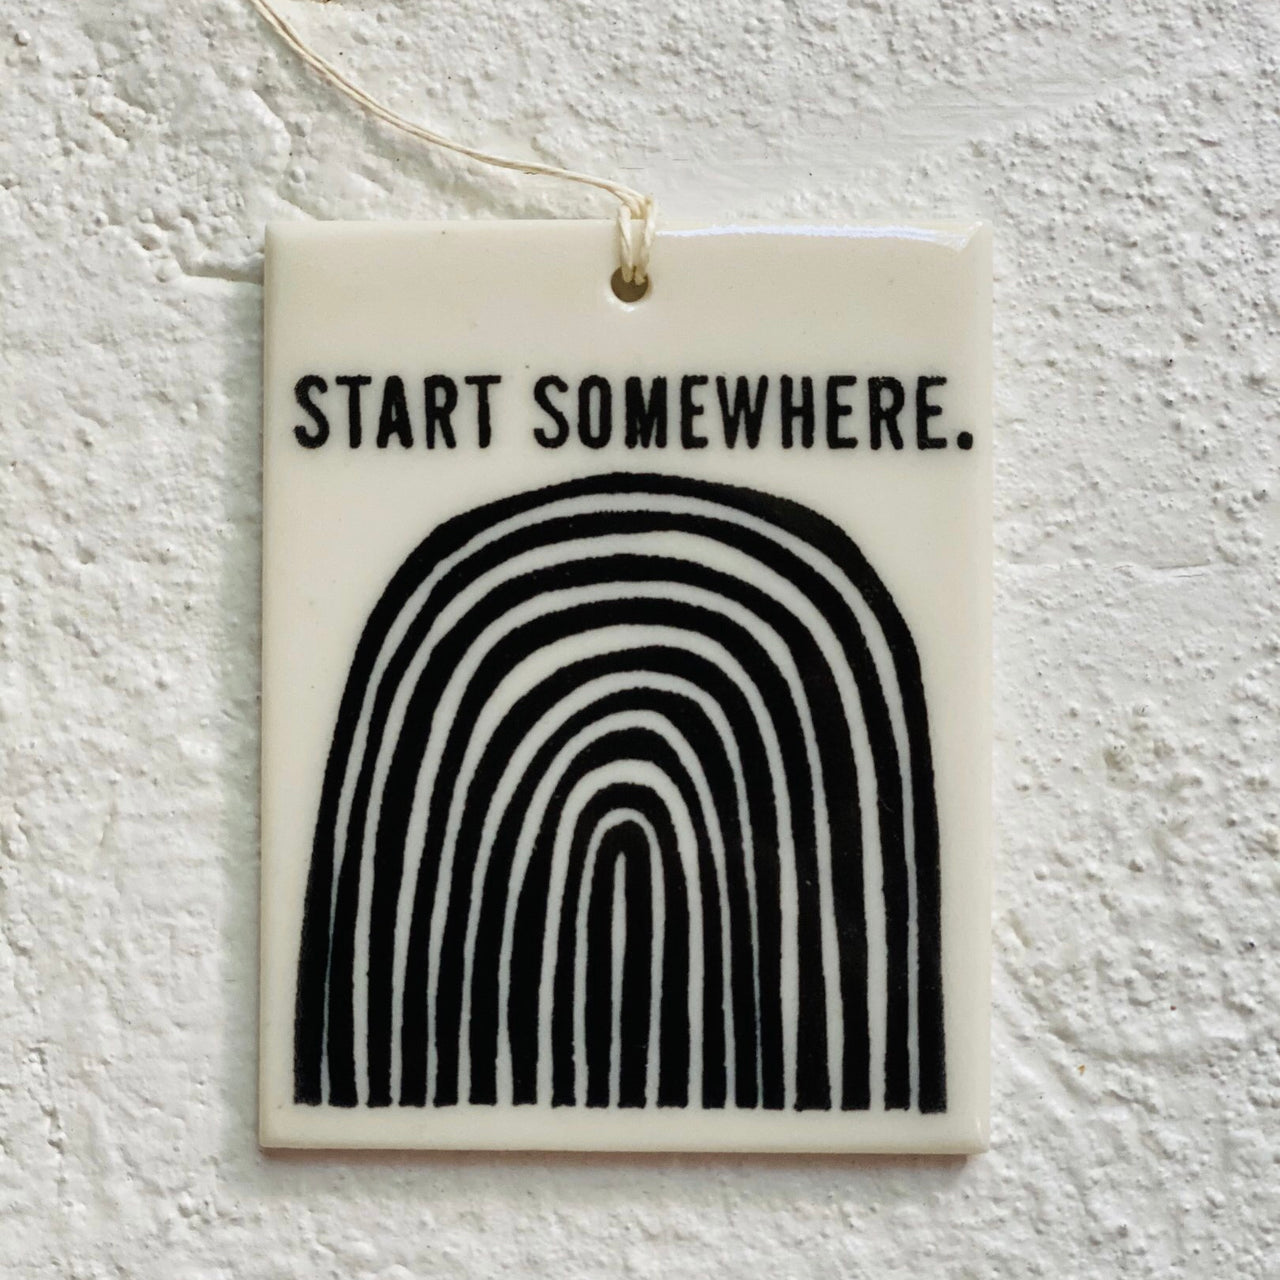 Start Somewhere - porcelain tag